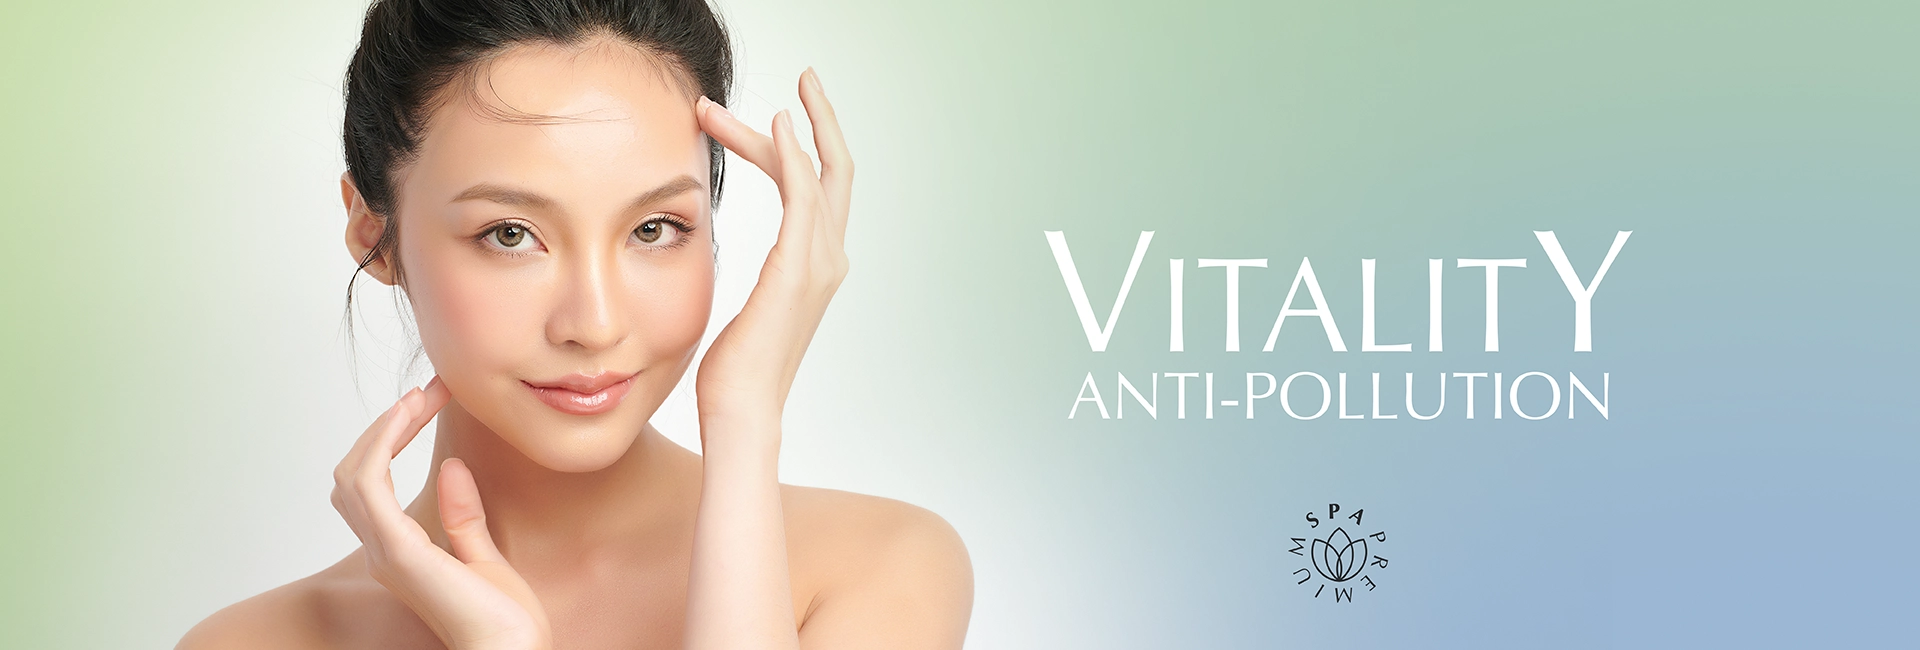 tratamiento facial vitality